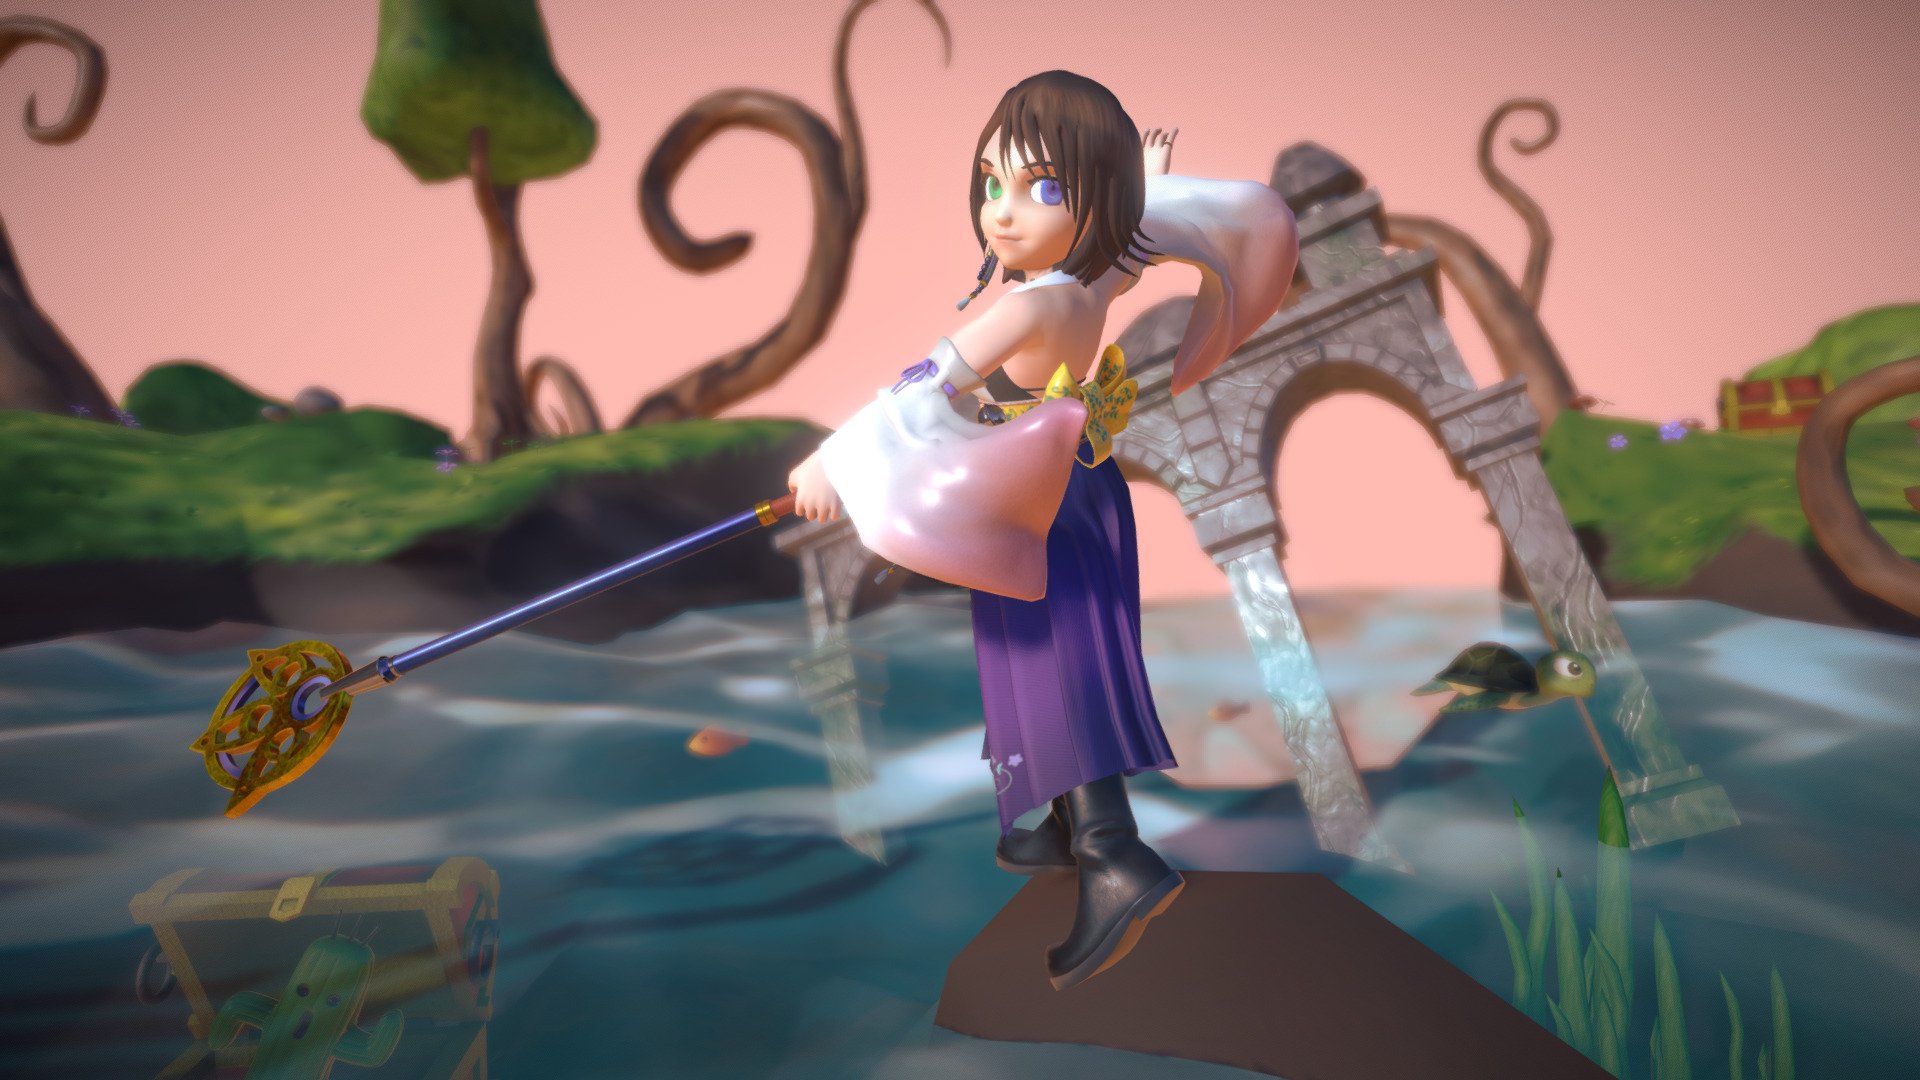 3D file Diorama Final fantasy X - Tidus + Yuna + Yuna ffx-2 + Yuna sexy  version + Extra Glyph base 🫦・Model to download and 3D print・Cults